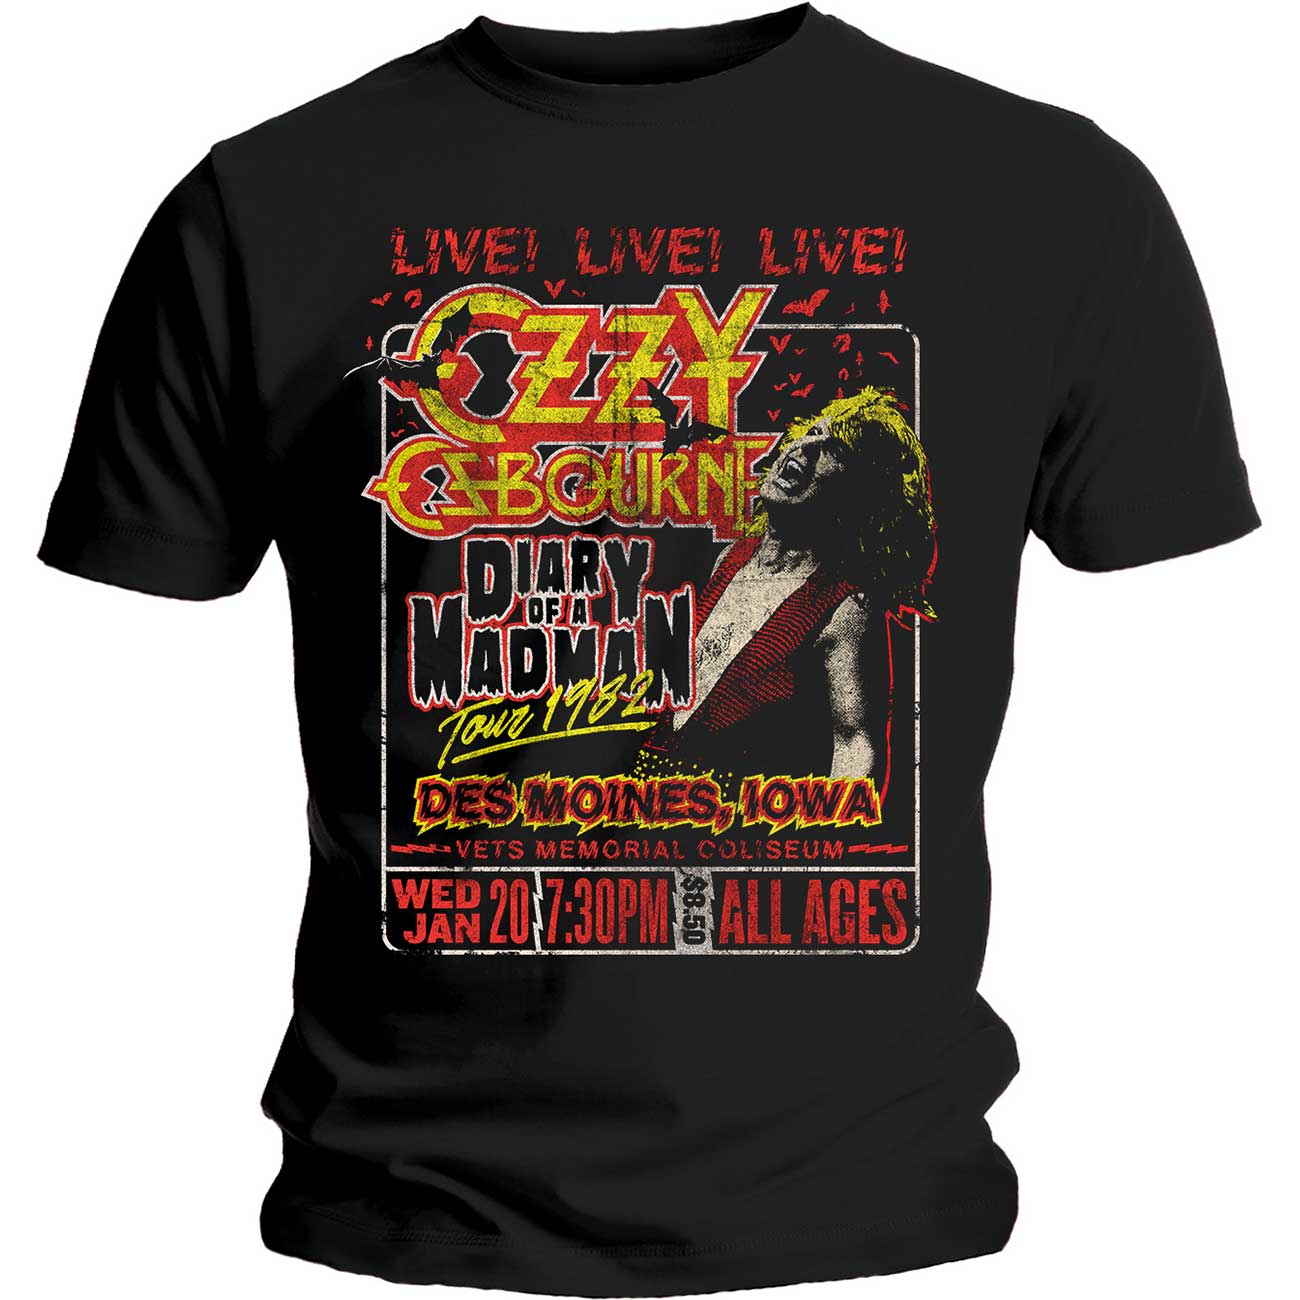 Ozzy Osbourne Unisex T-Shirt: Diary of a Madman Tour